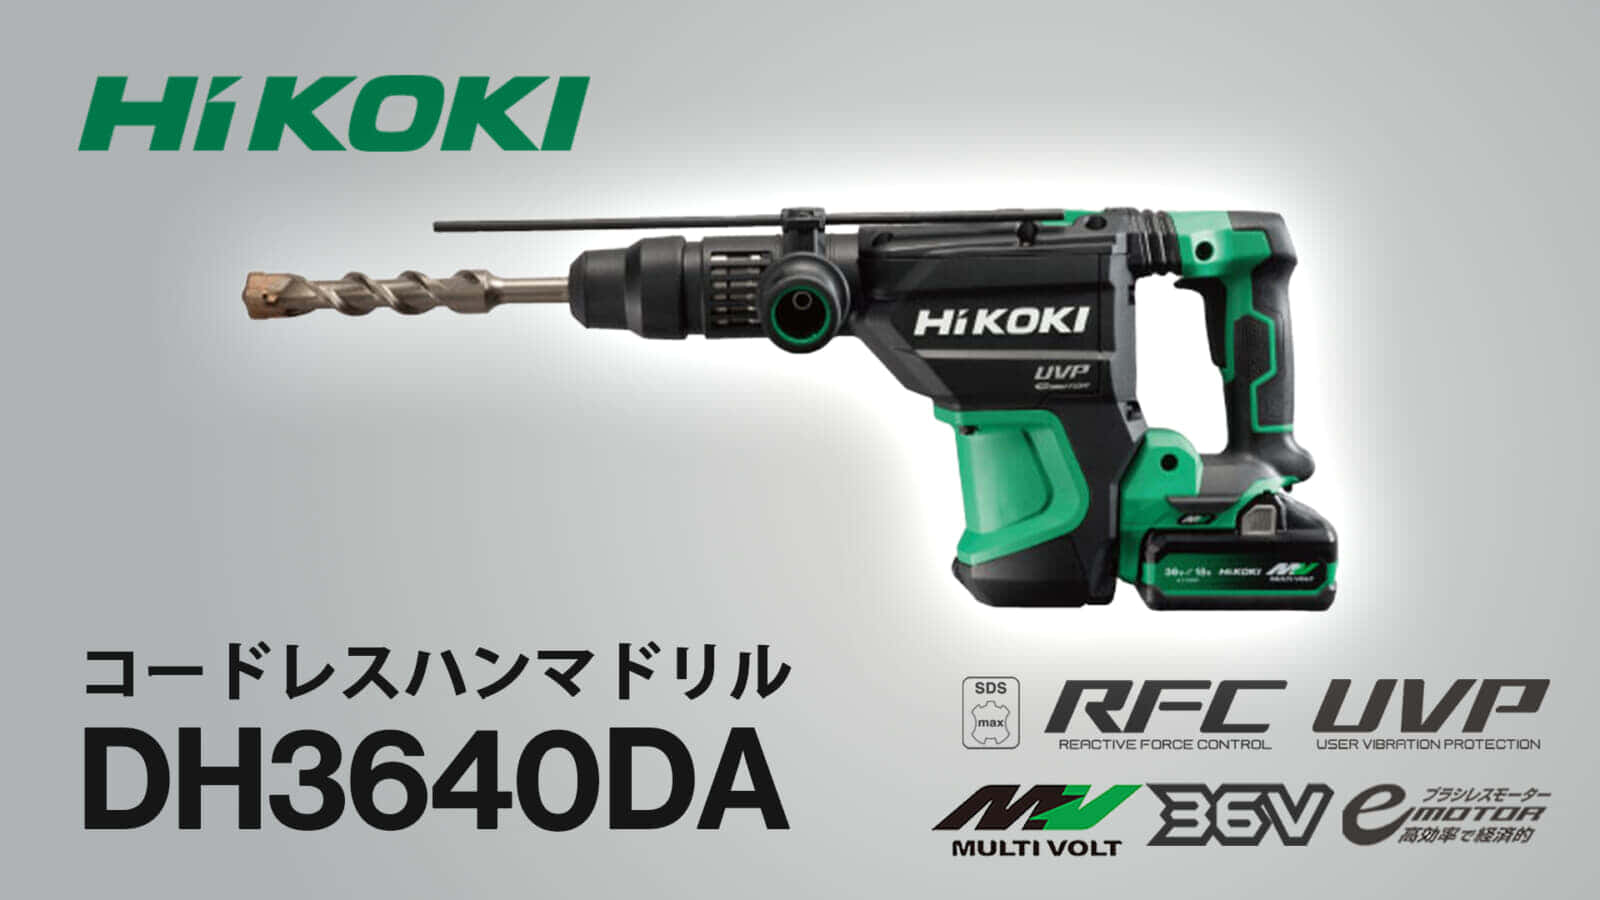 HiKOKI DH3640DA コードレスハンマドリルを発売、軽量ボディでクラストップの作業スピード